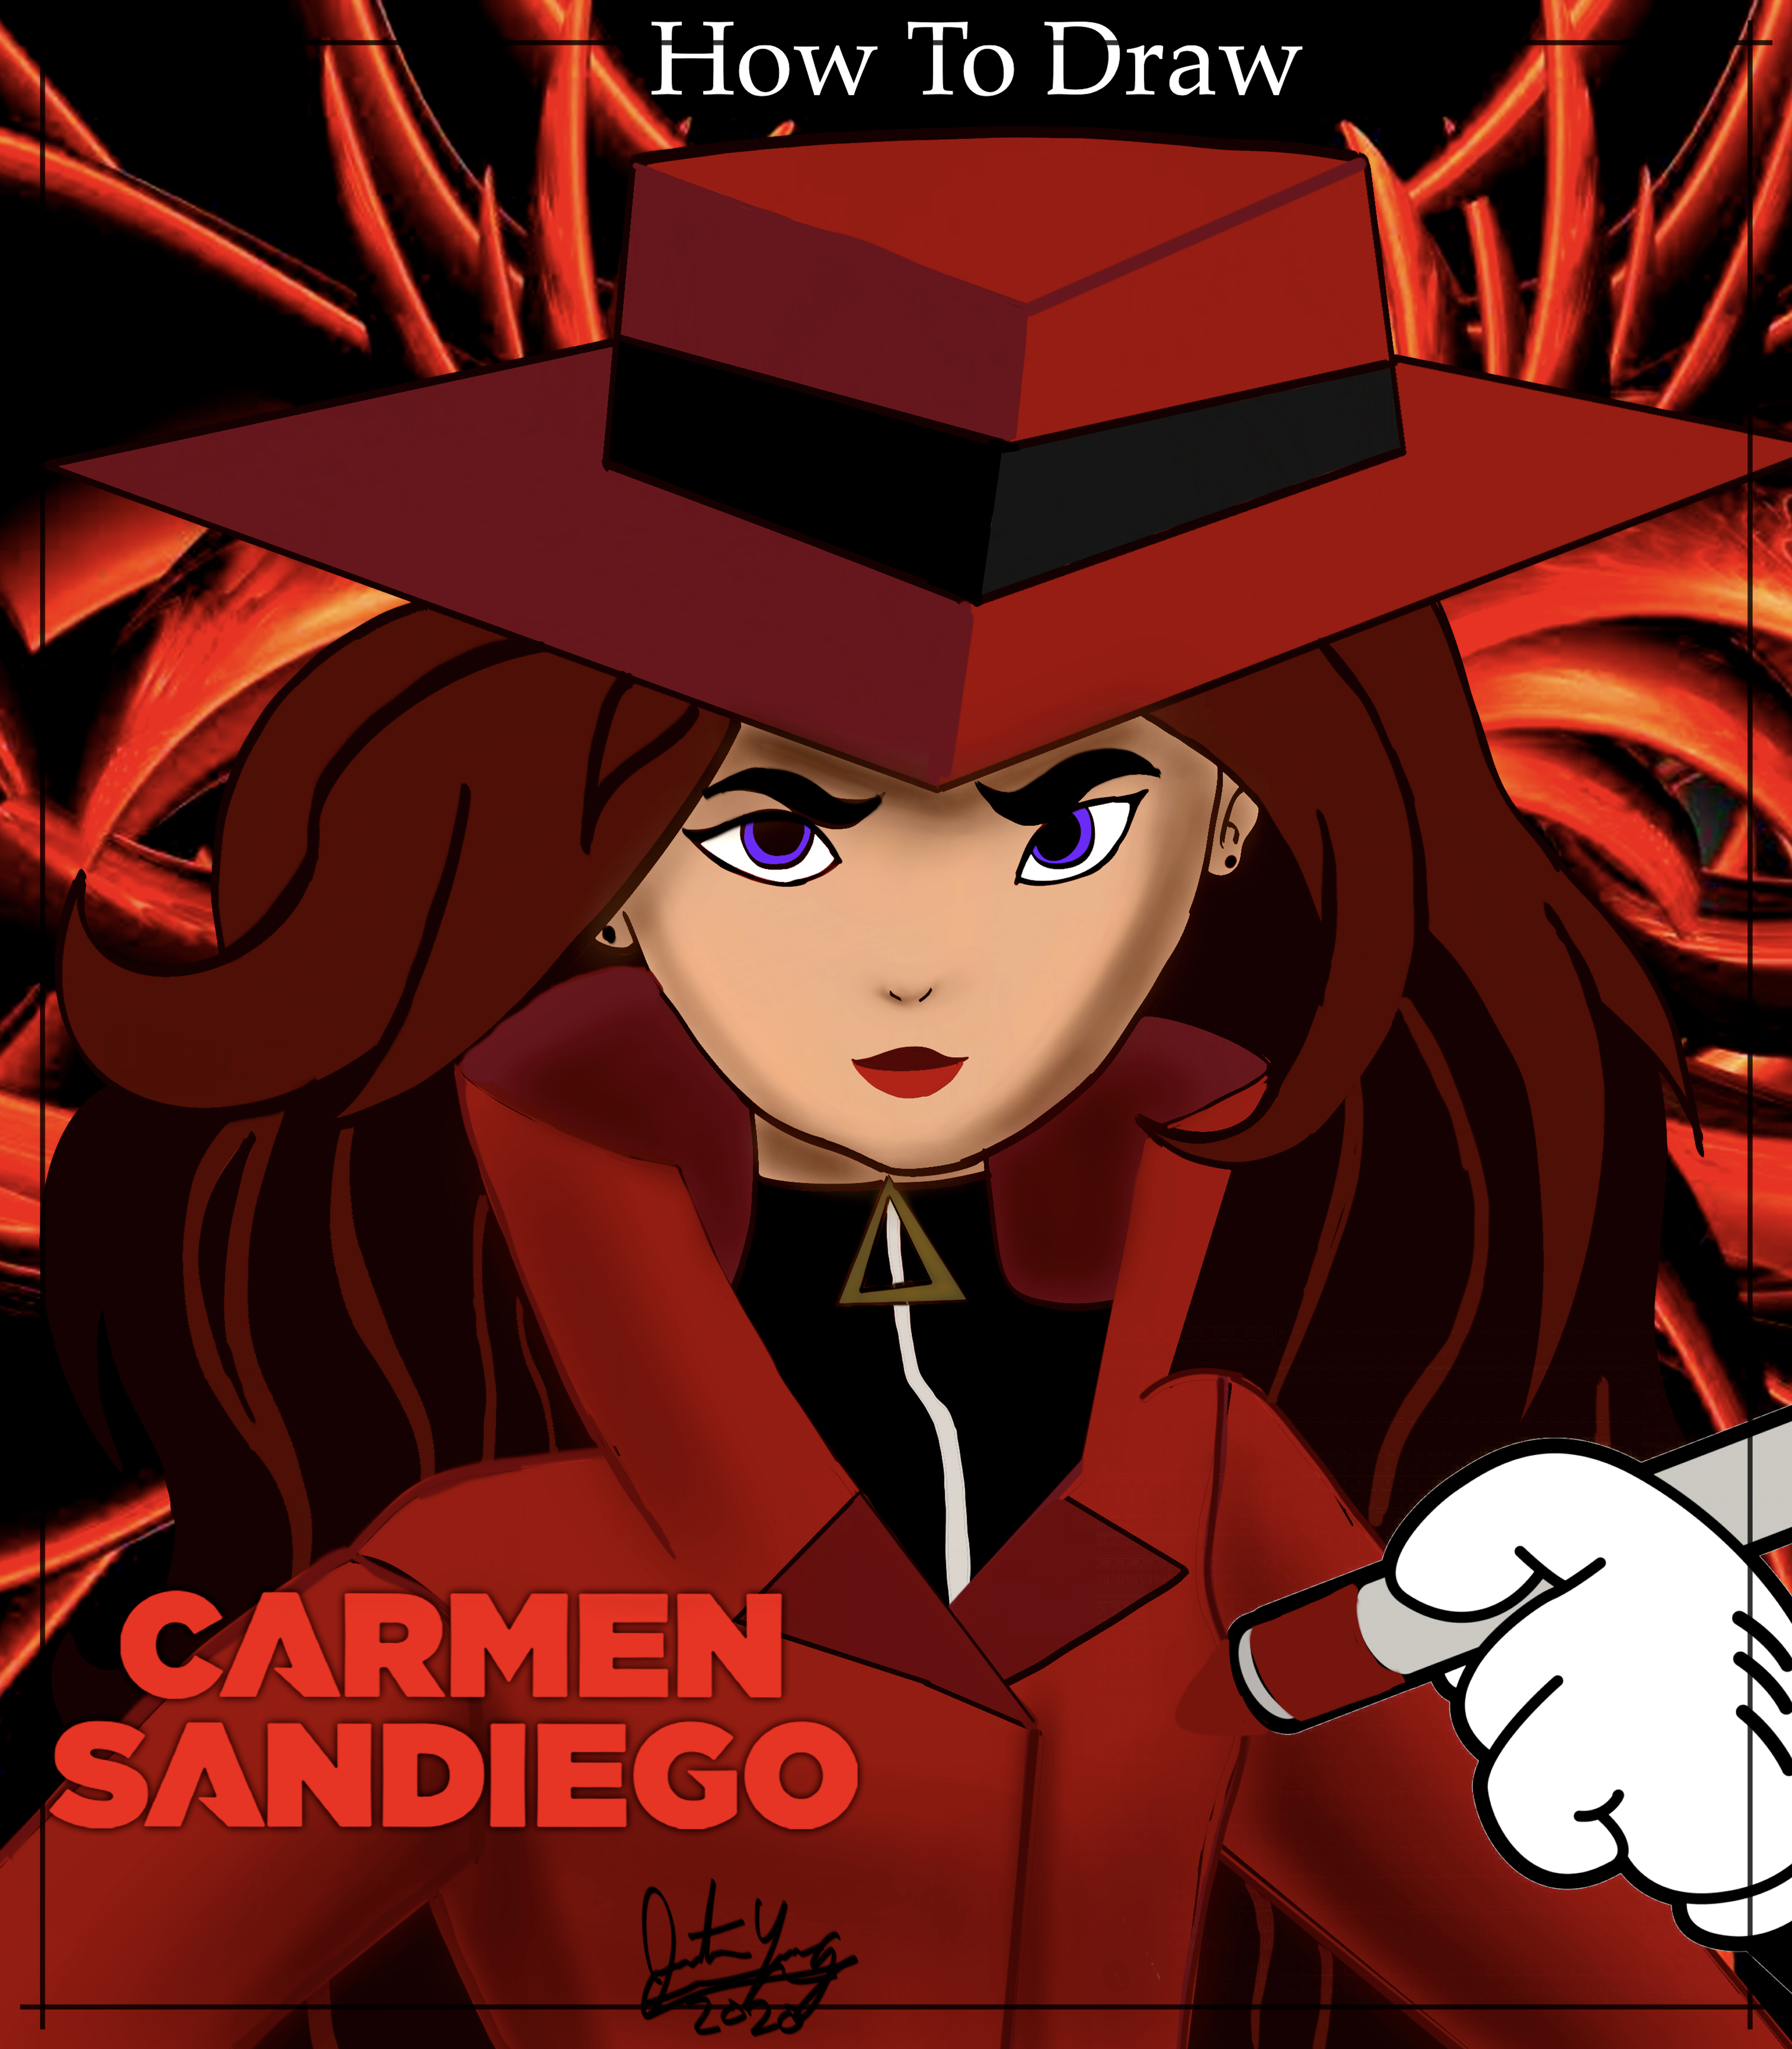 Art of Carmen Sandiego by Yingcartoonman on DeviantArt